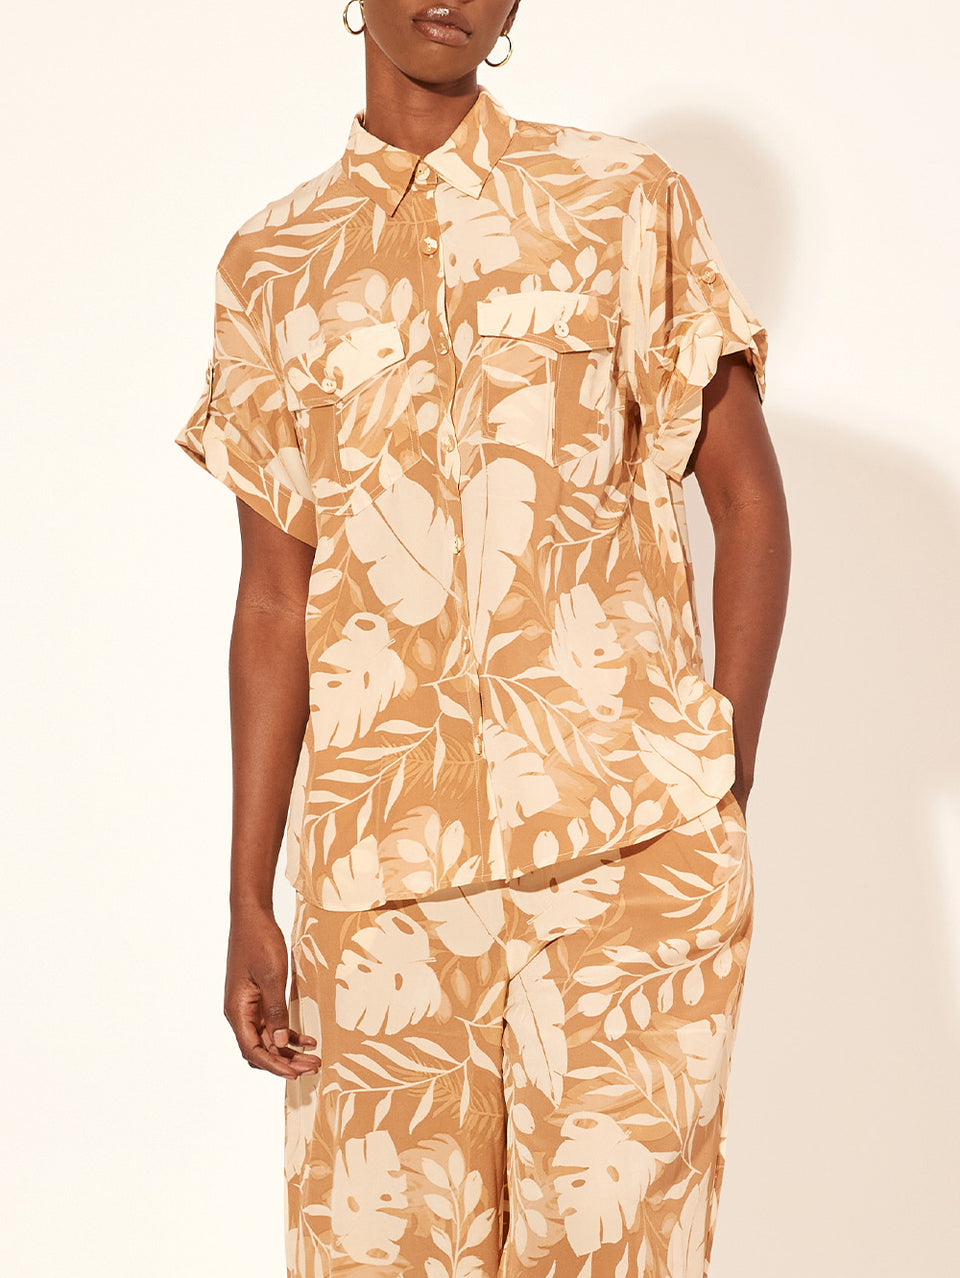 Cove Shirt KIVARI | Model wears neutral coloured leaf printed shirt close up